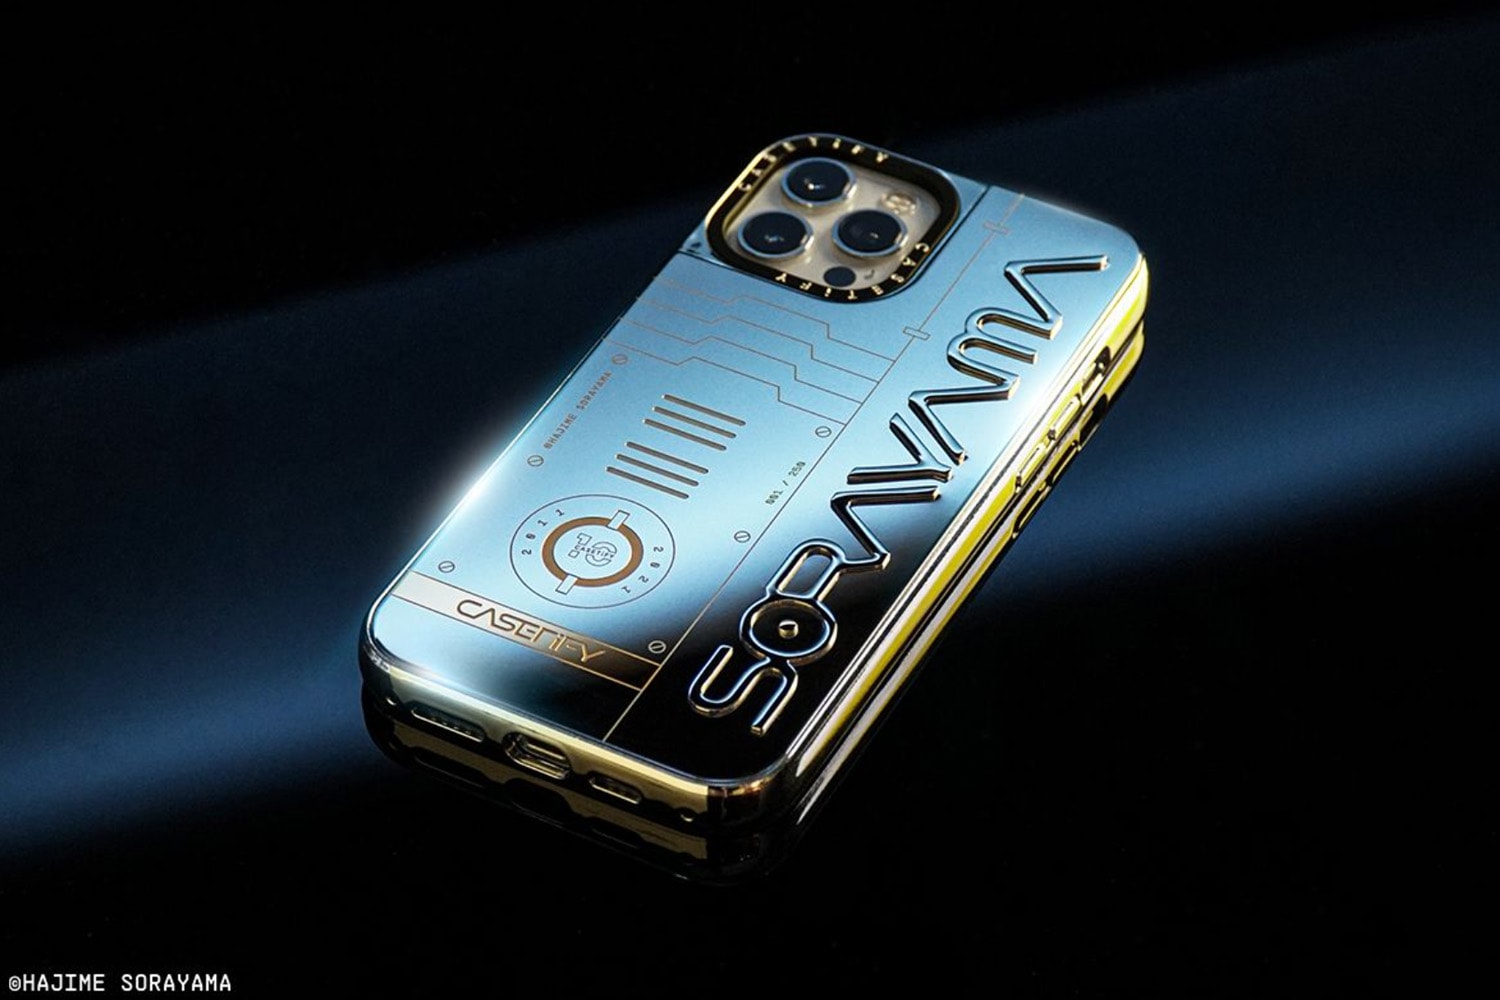 Casetify Hajime Sorayama Tech Accessories Collaboration Phone Case